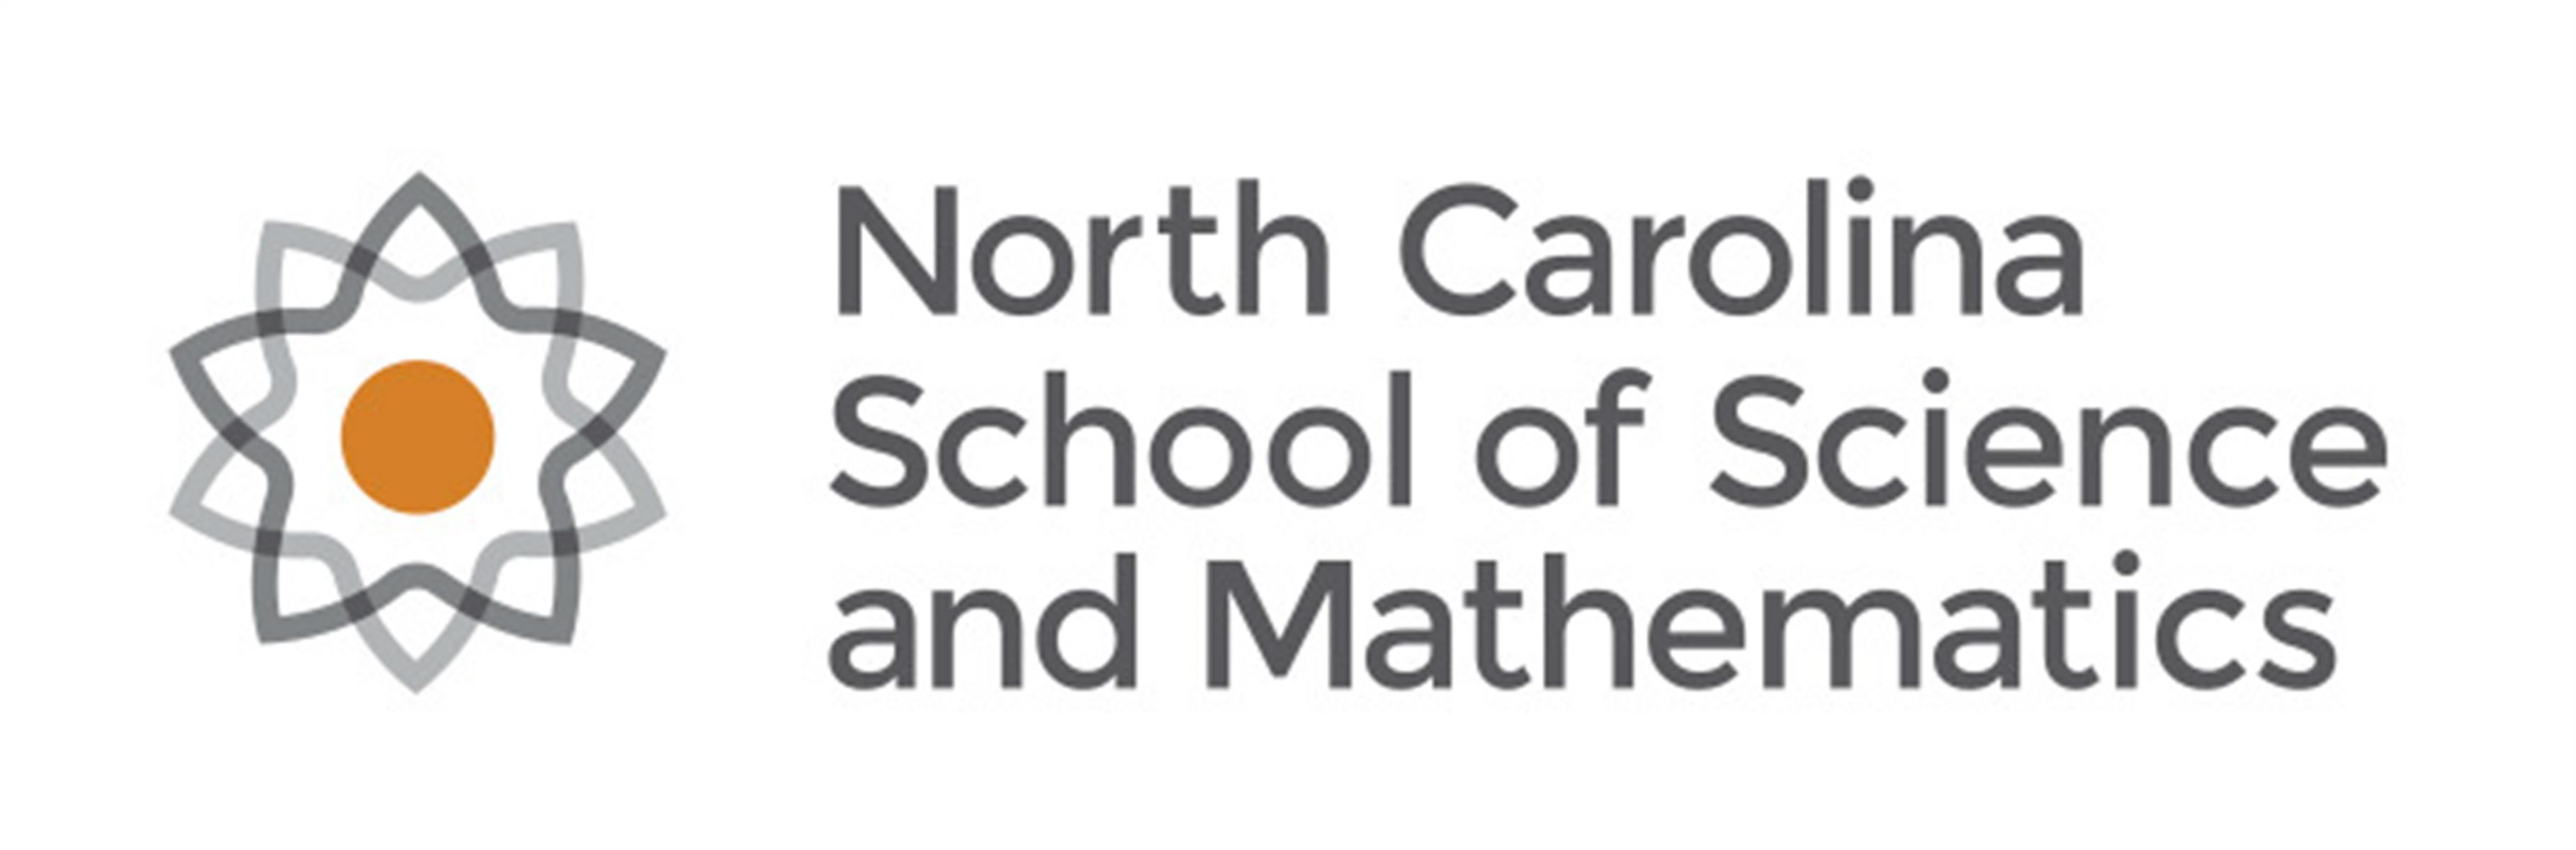 NC School of Science and Mathematics Morganton Academic Programs